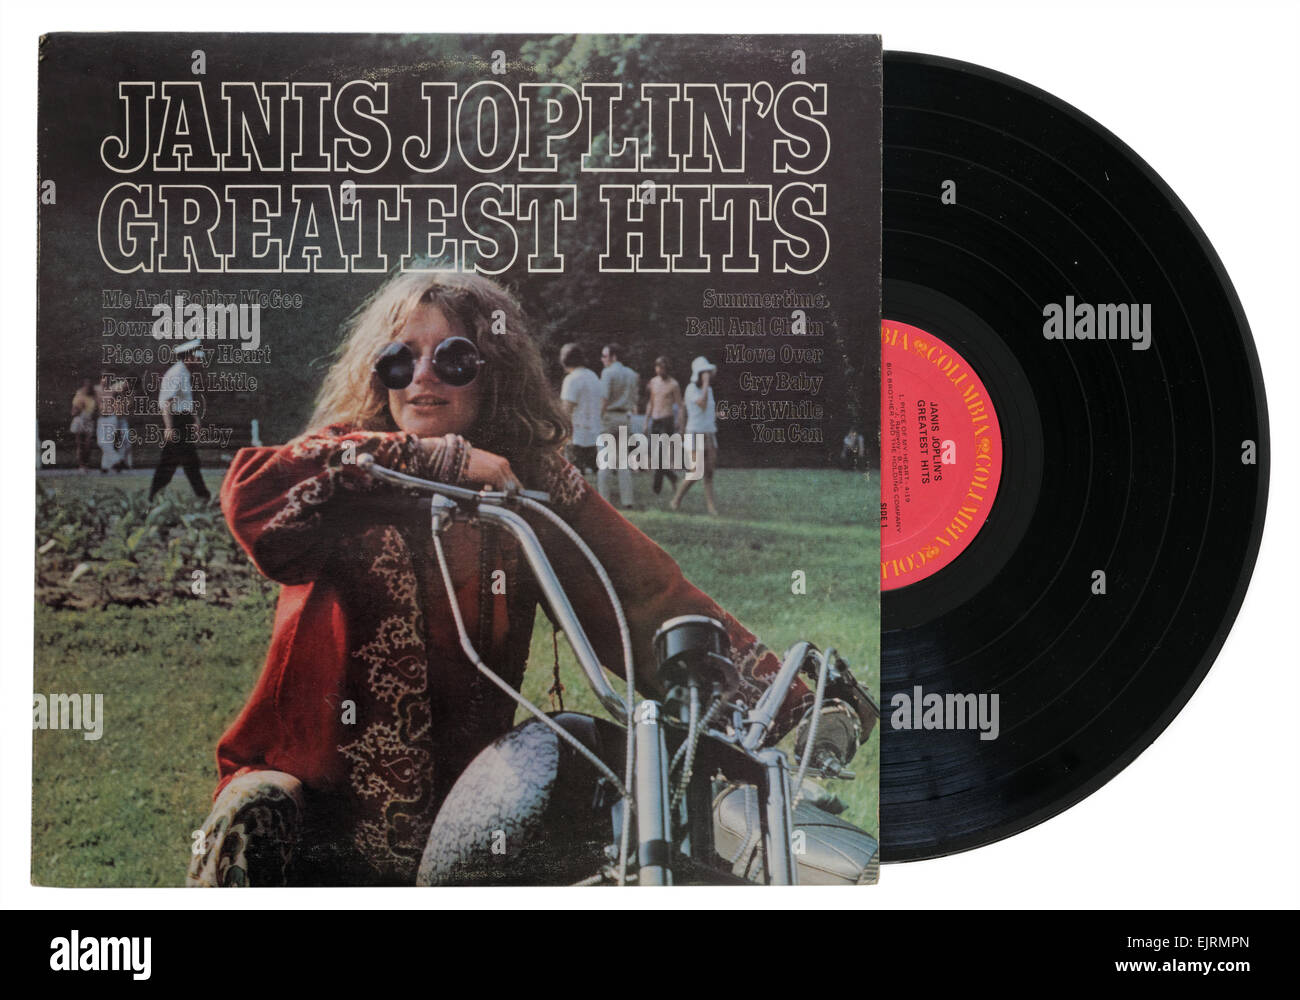 Janis Joplin Greatest Hits album Foto Stock